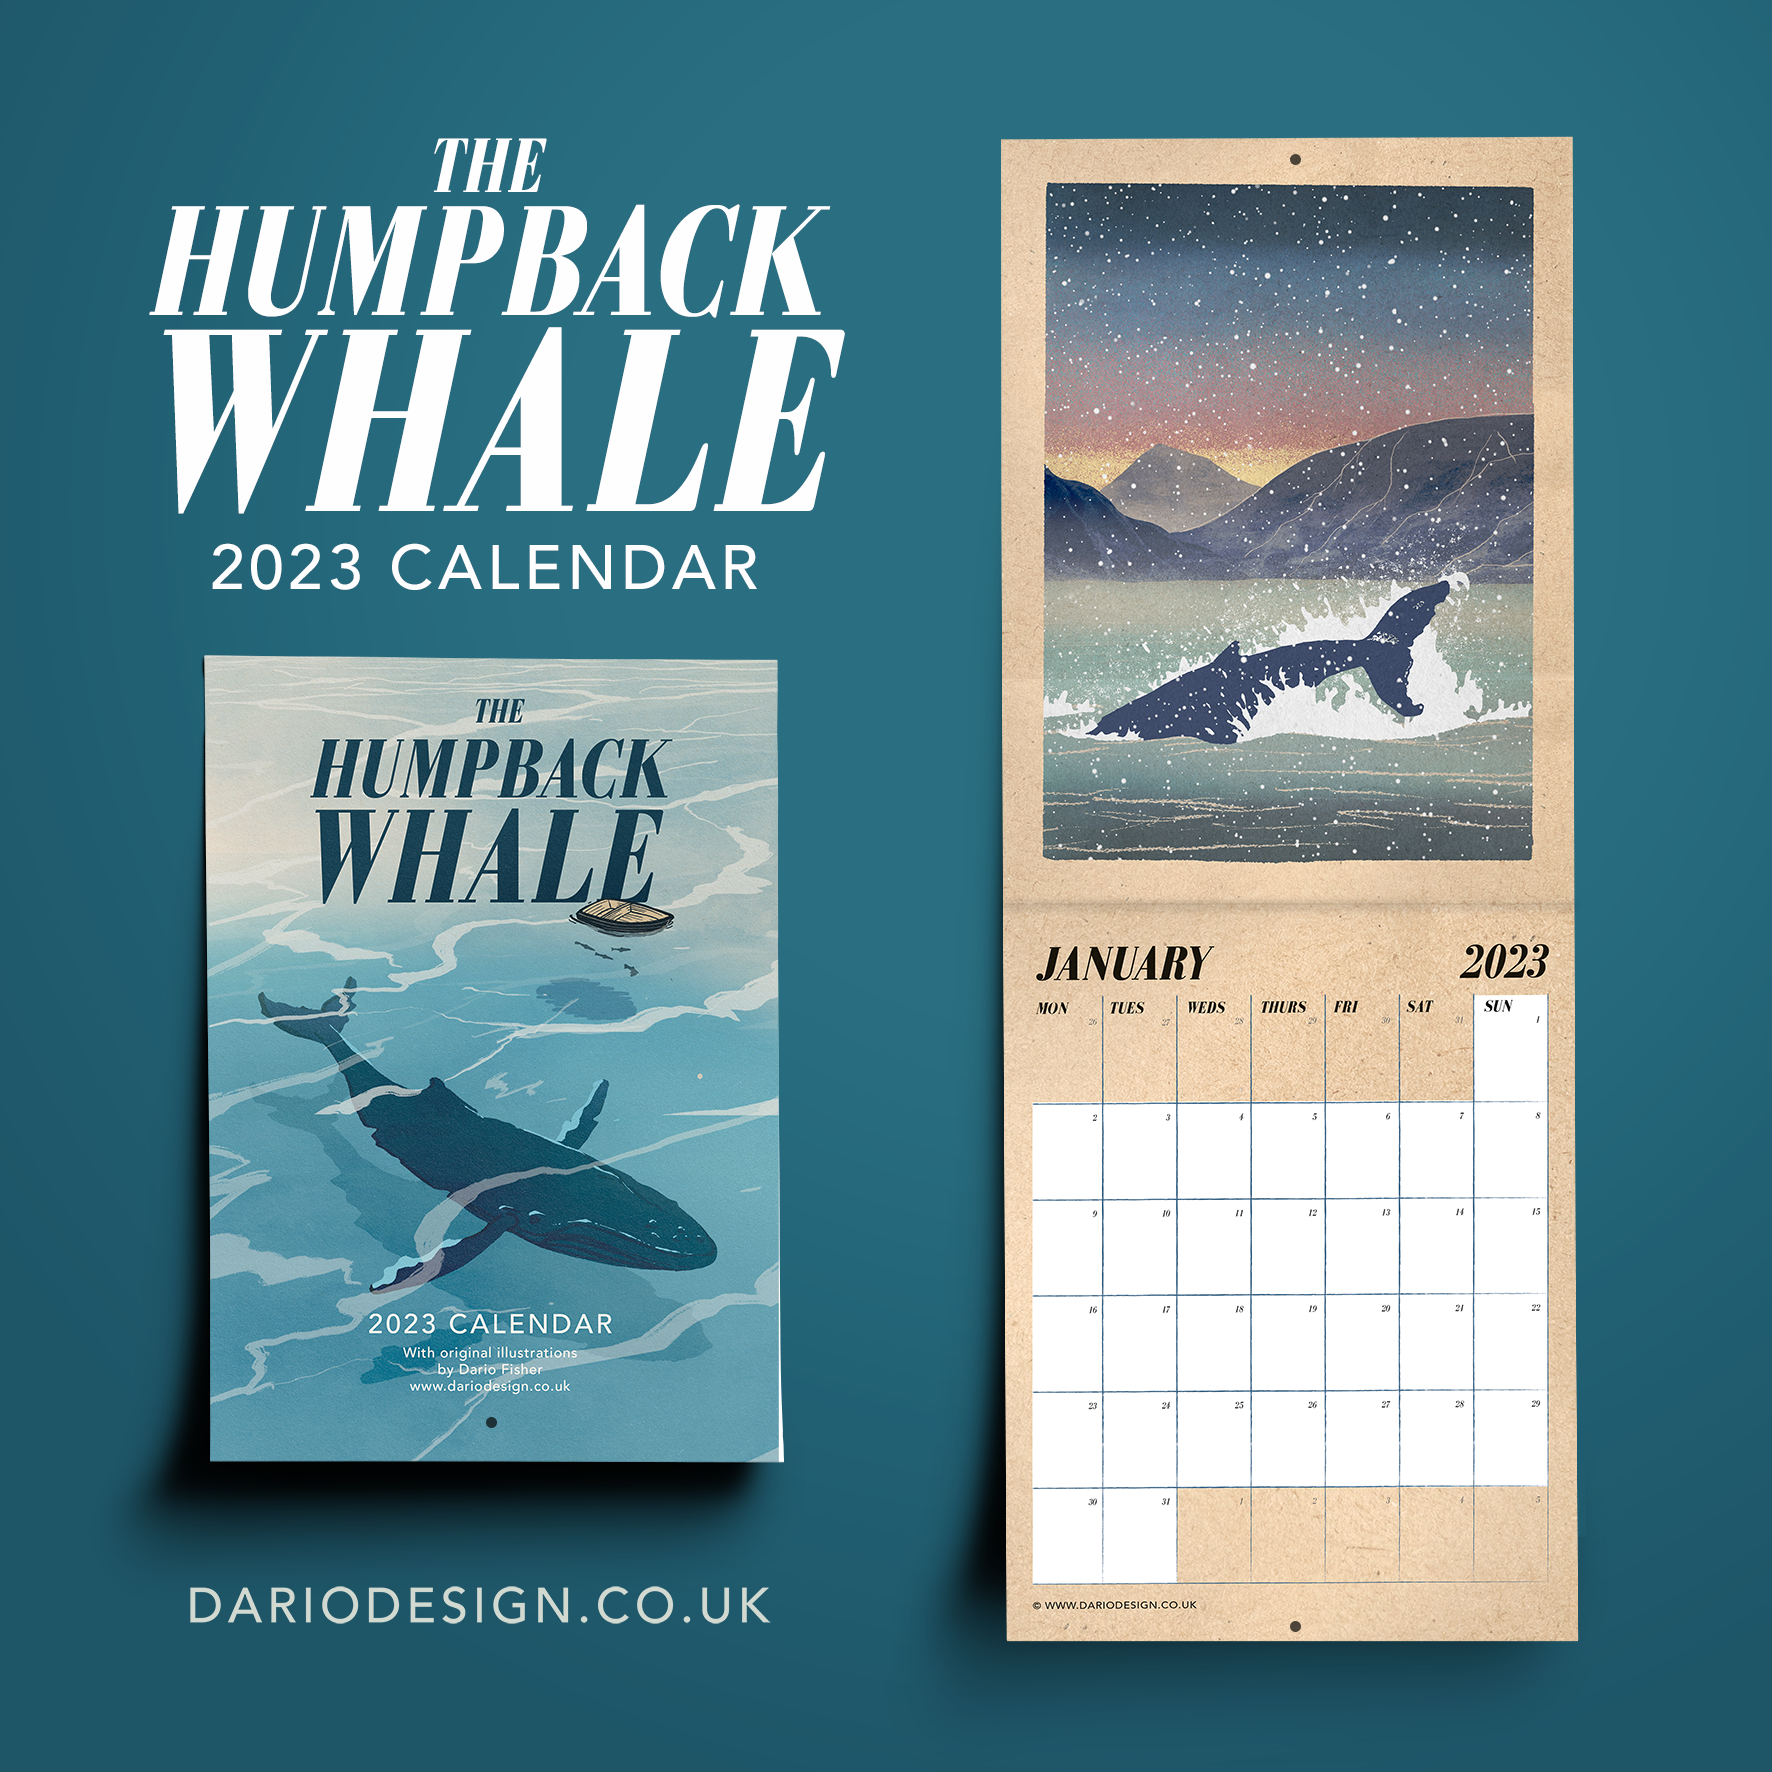 Dario Fisher - Illustration And Design - The Humpback Whale 2023 Calendar